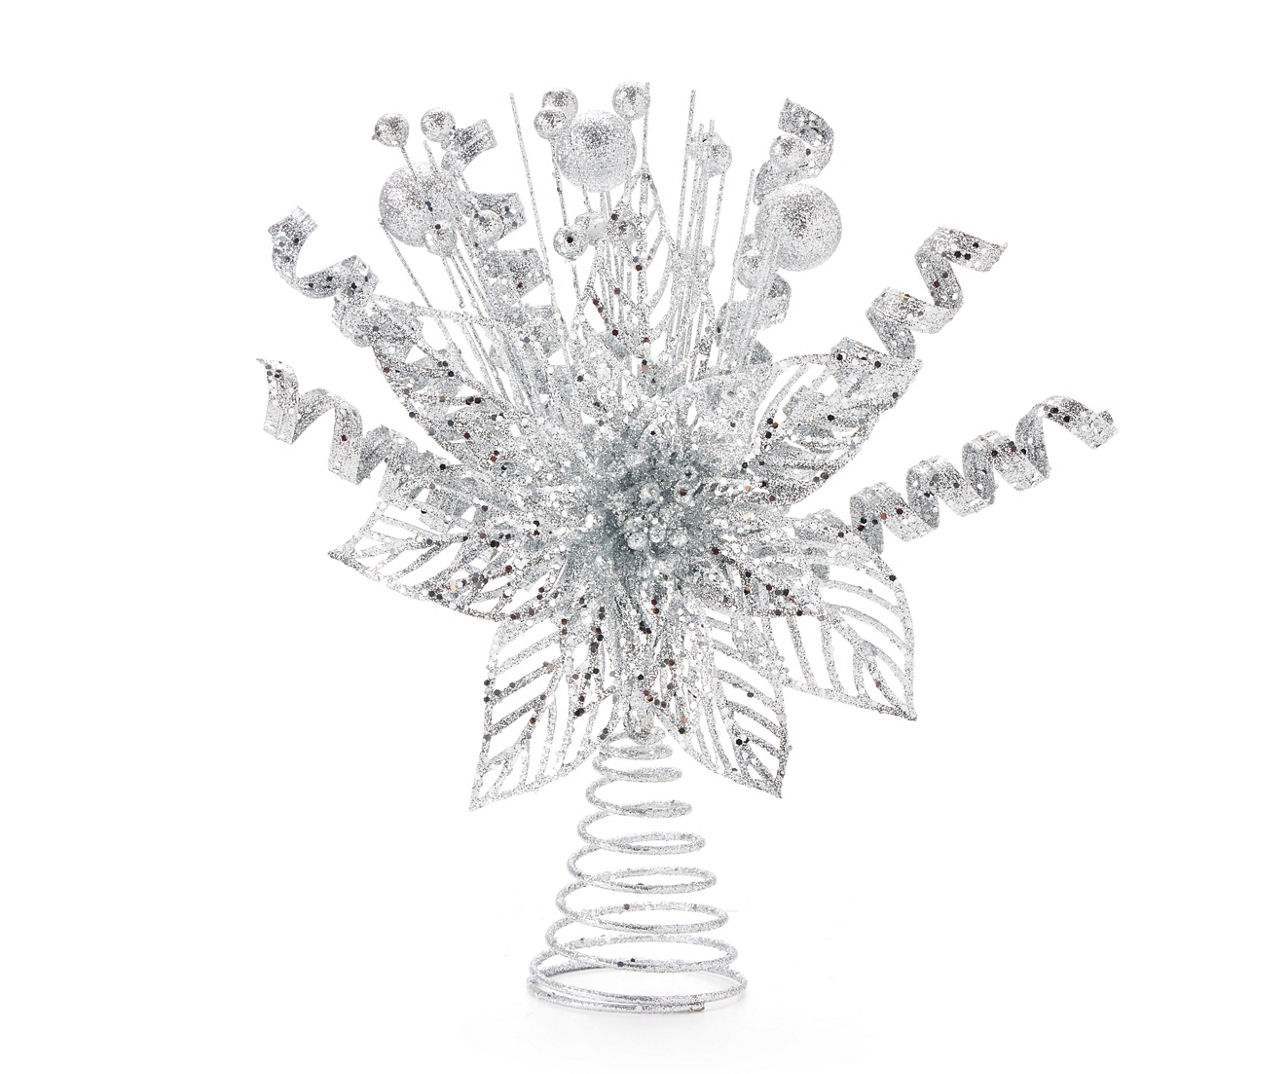 Snow sparkle glitter floral picks set of 5 – Craft Supply House